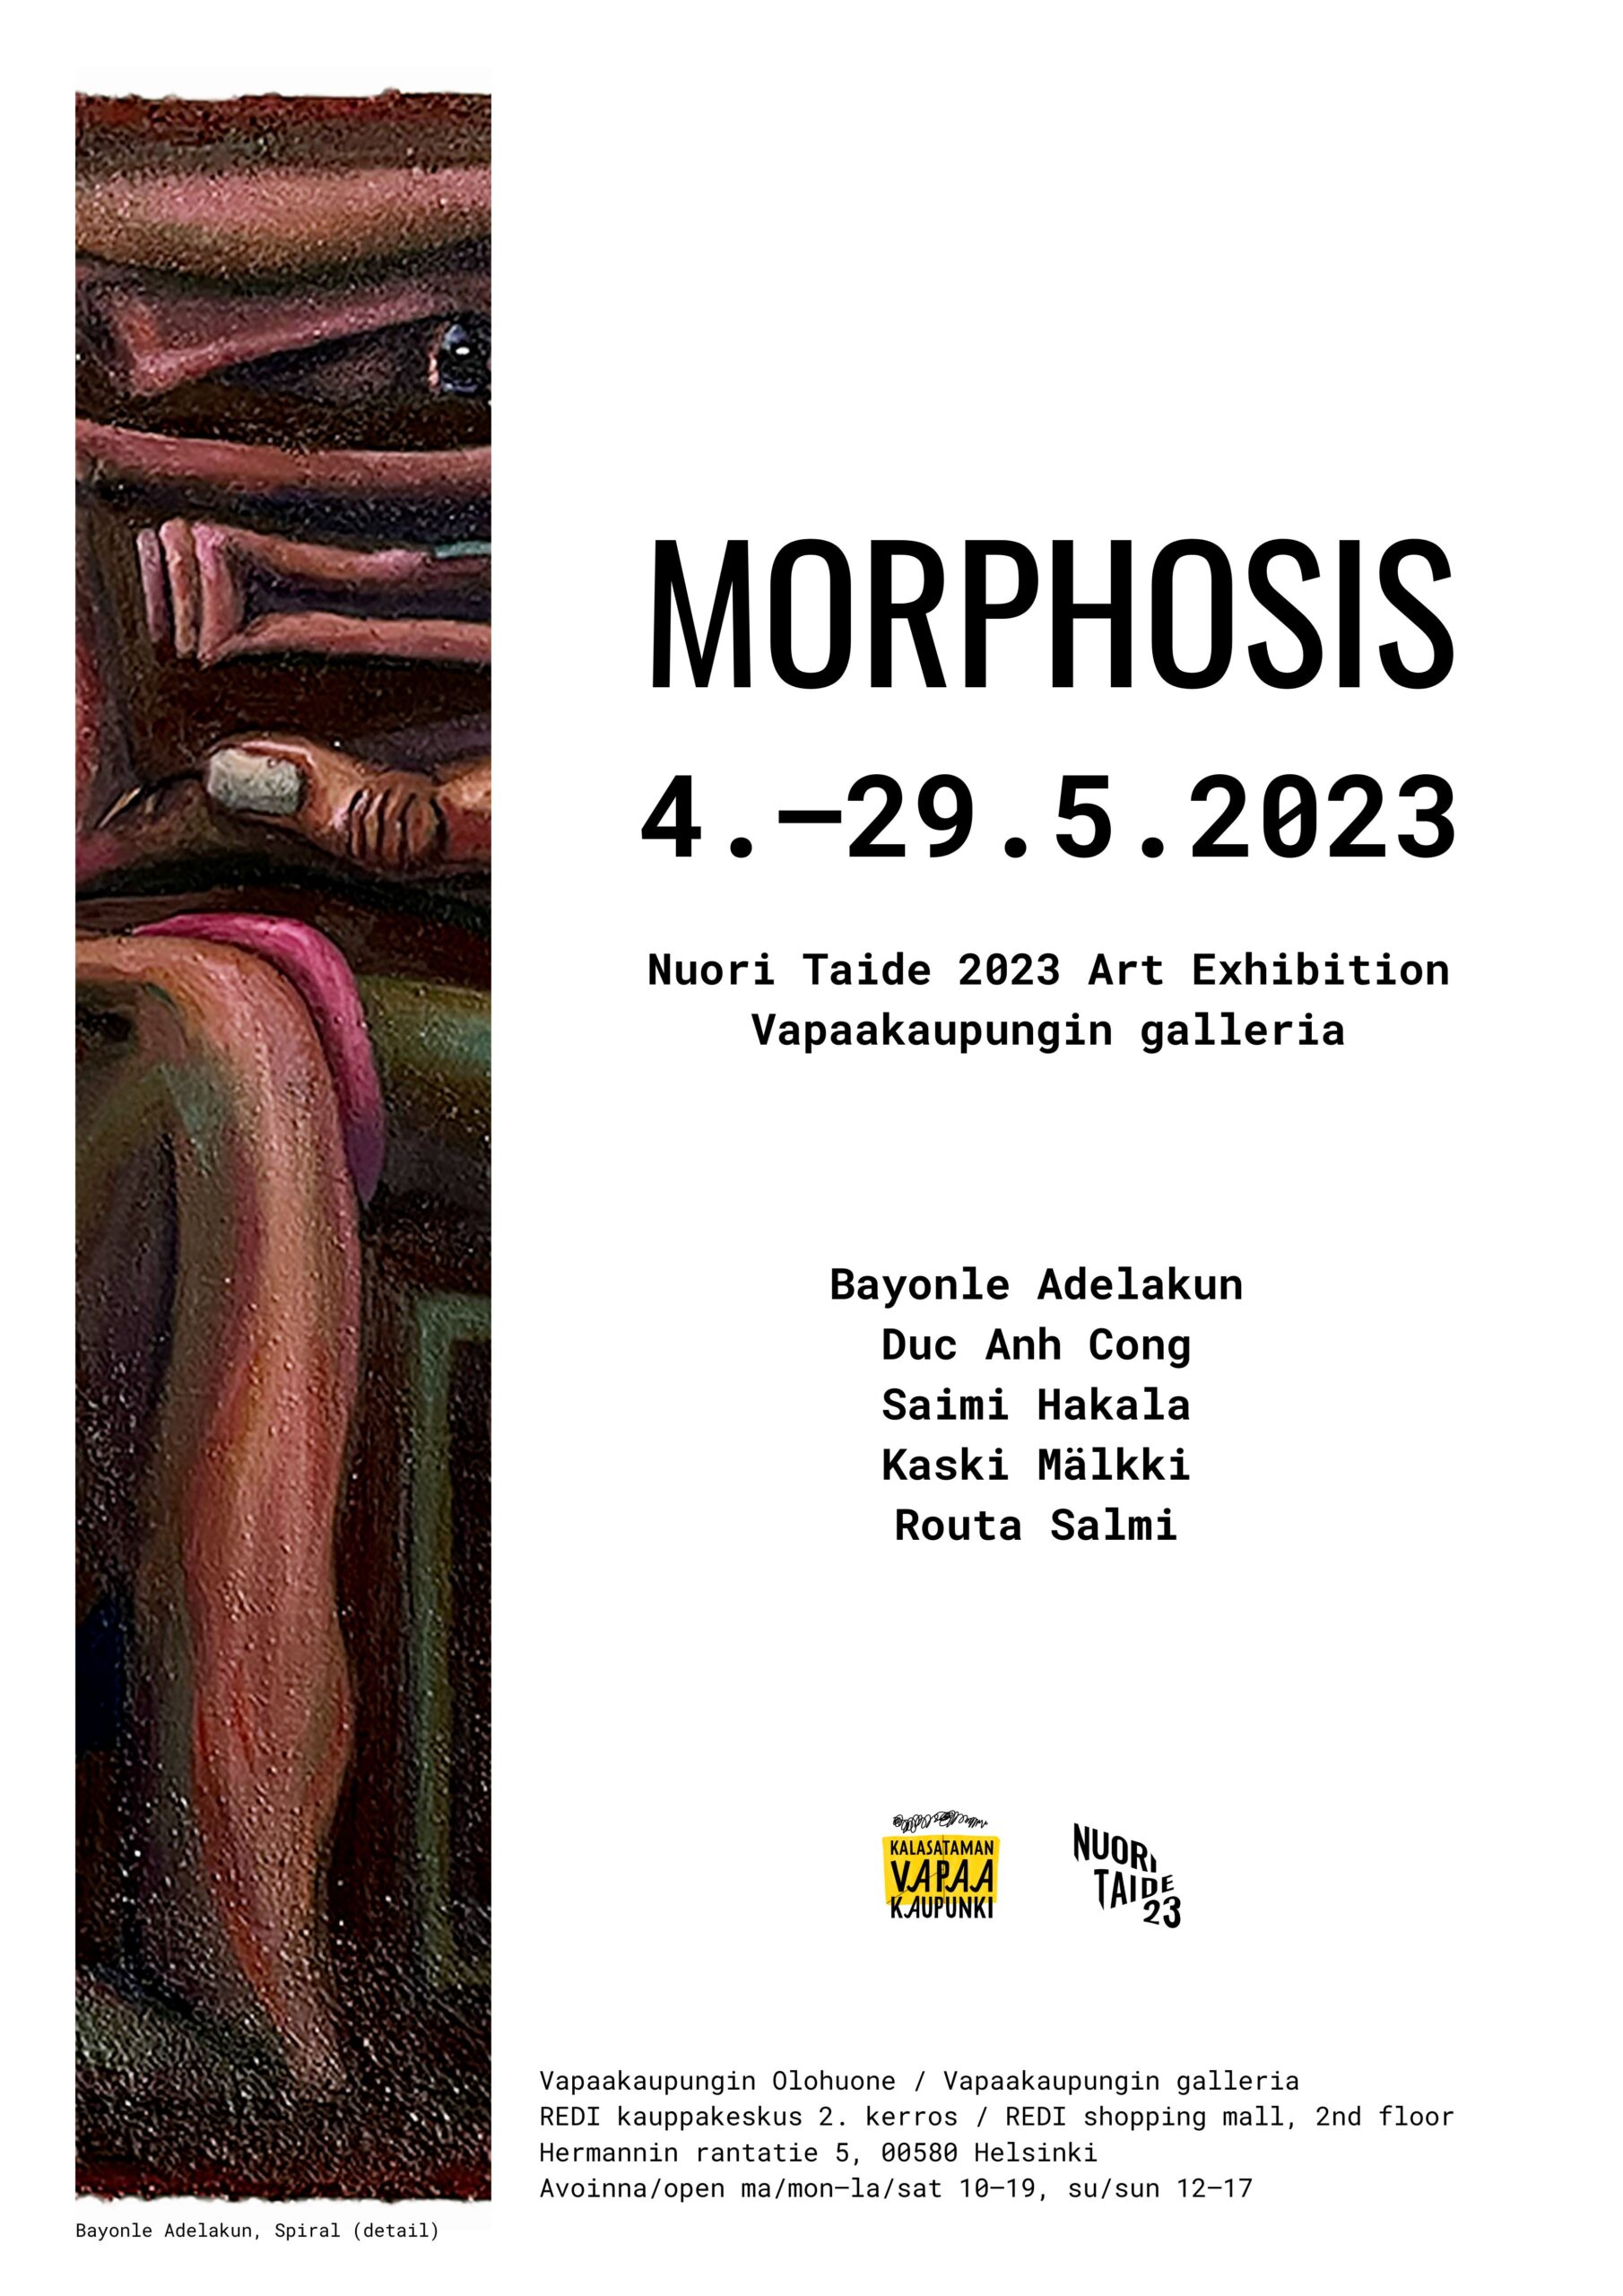 Morphosis näyttelyn julistekuva